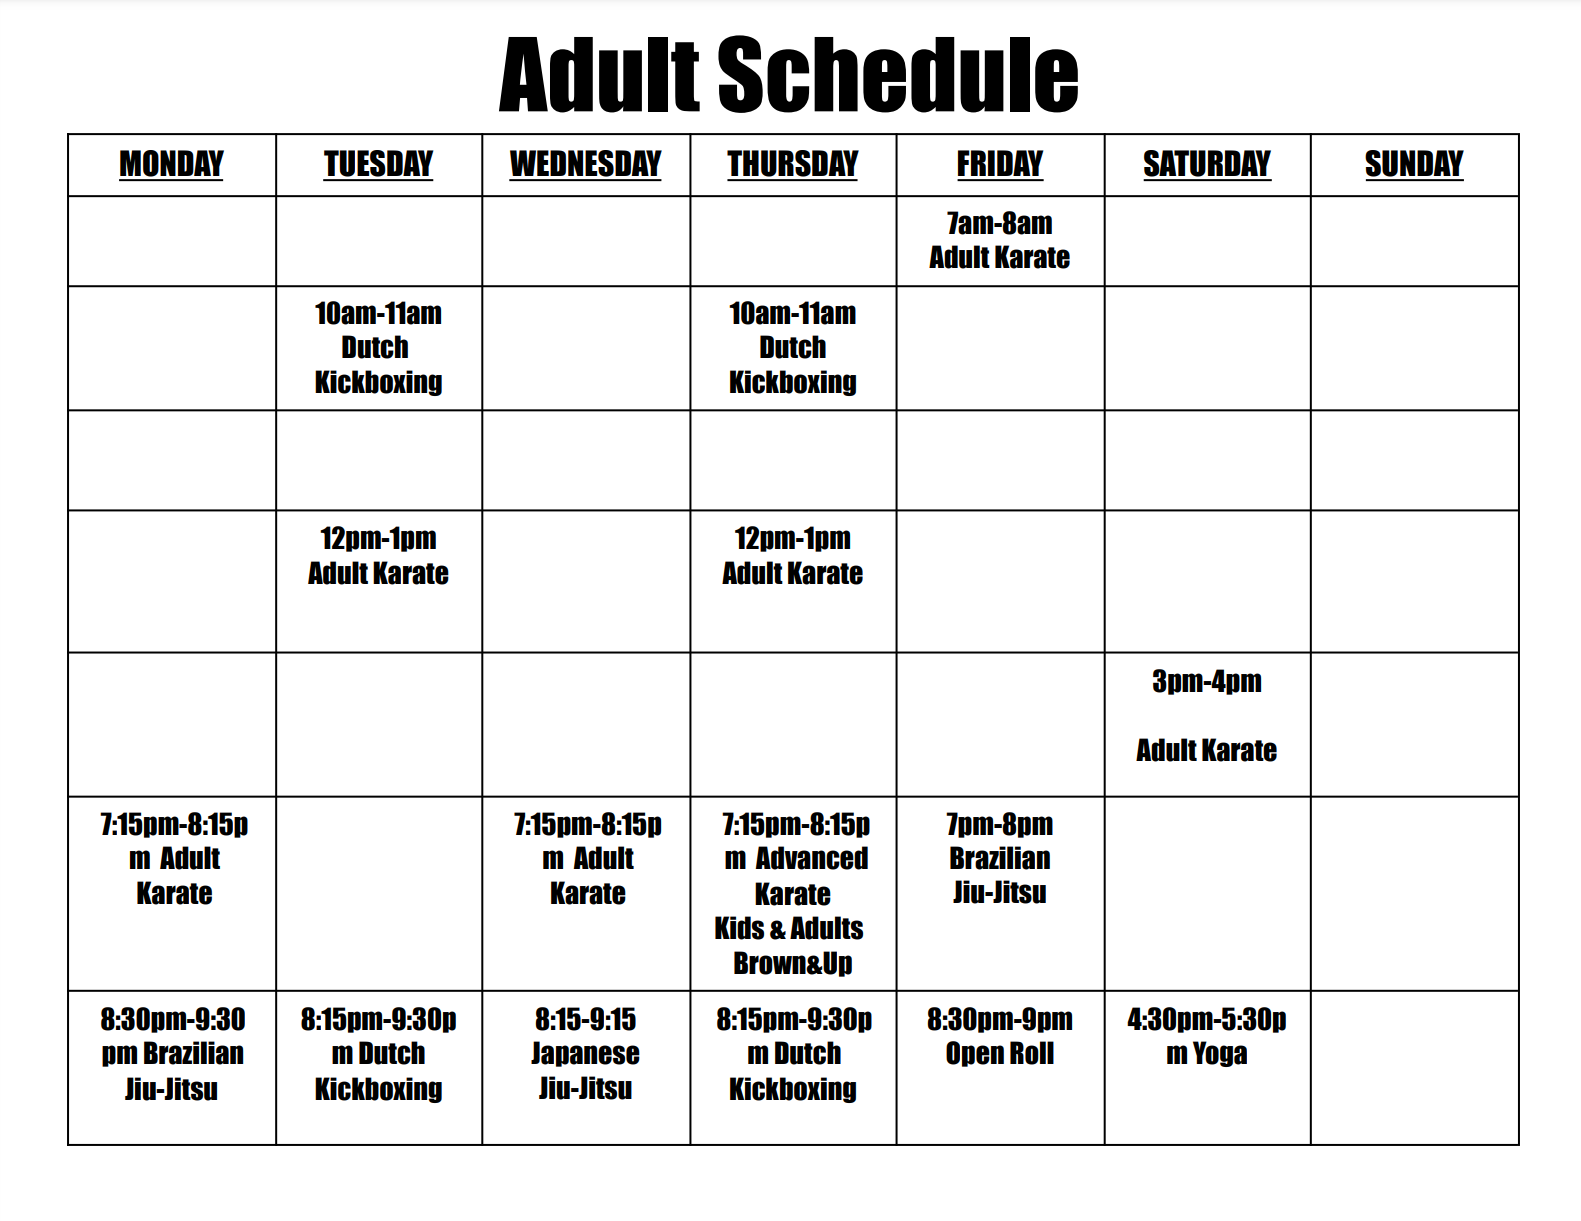 Adult Schedule image